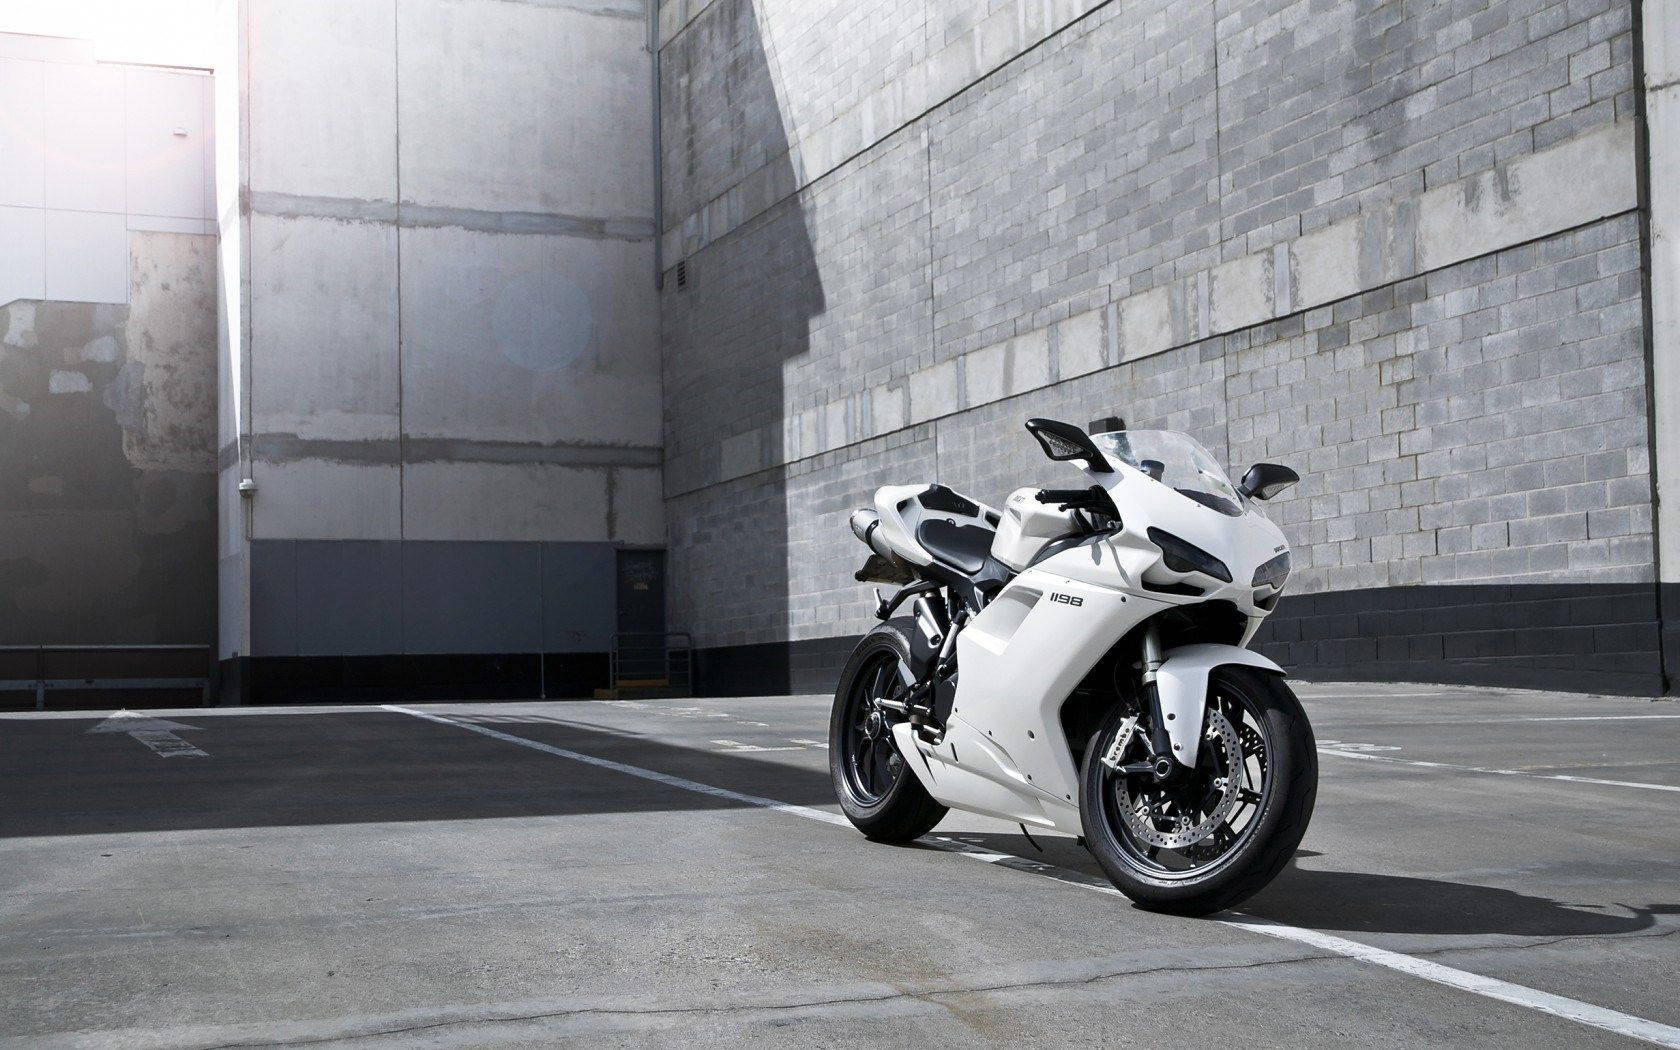 Race Ready: A Striking White Ducati 1198 Motor Bike Background